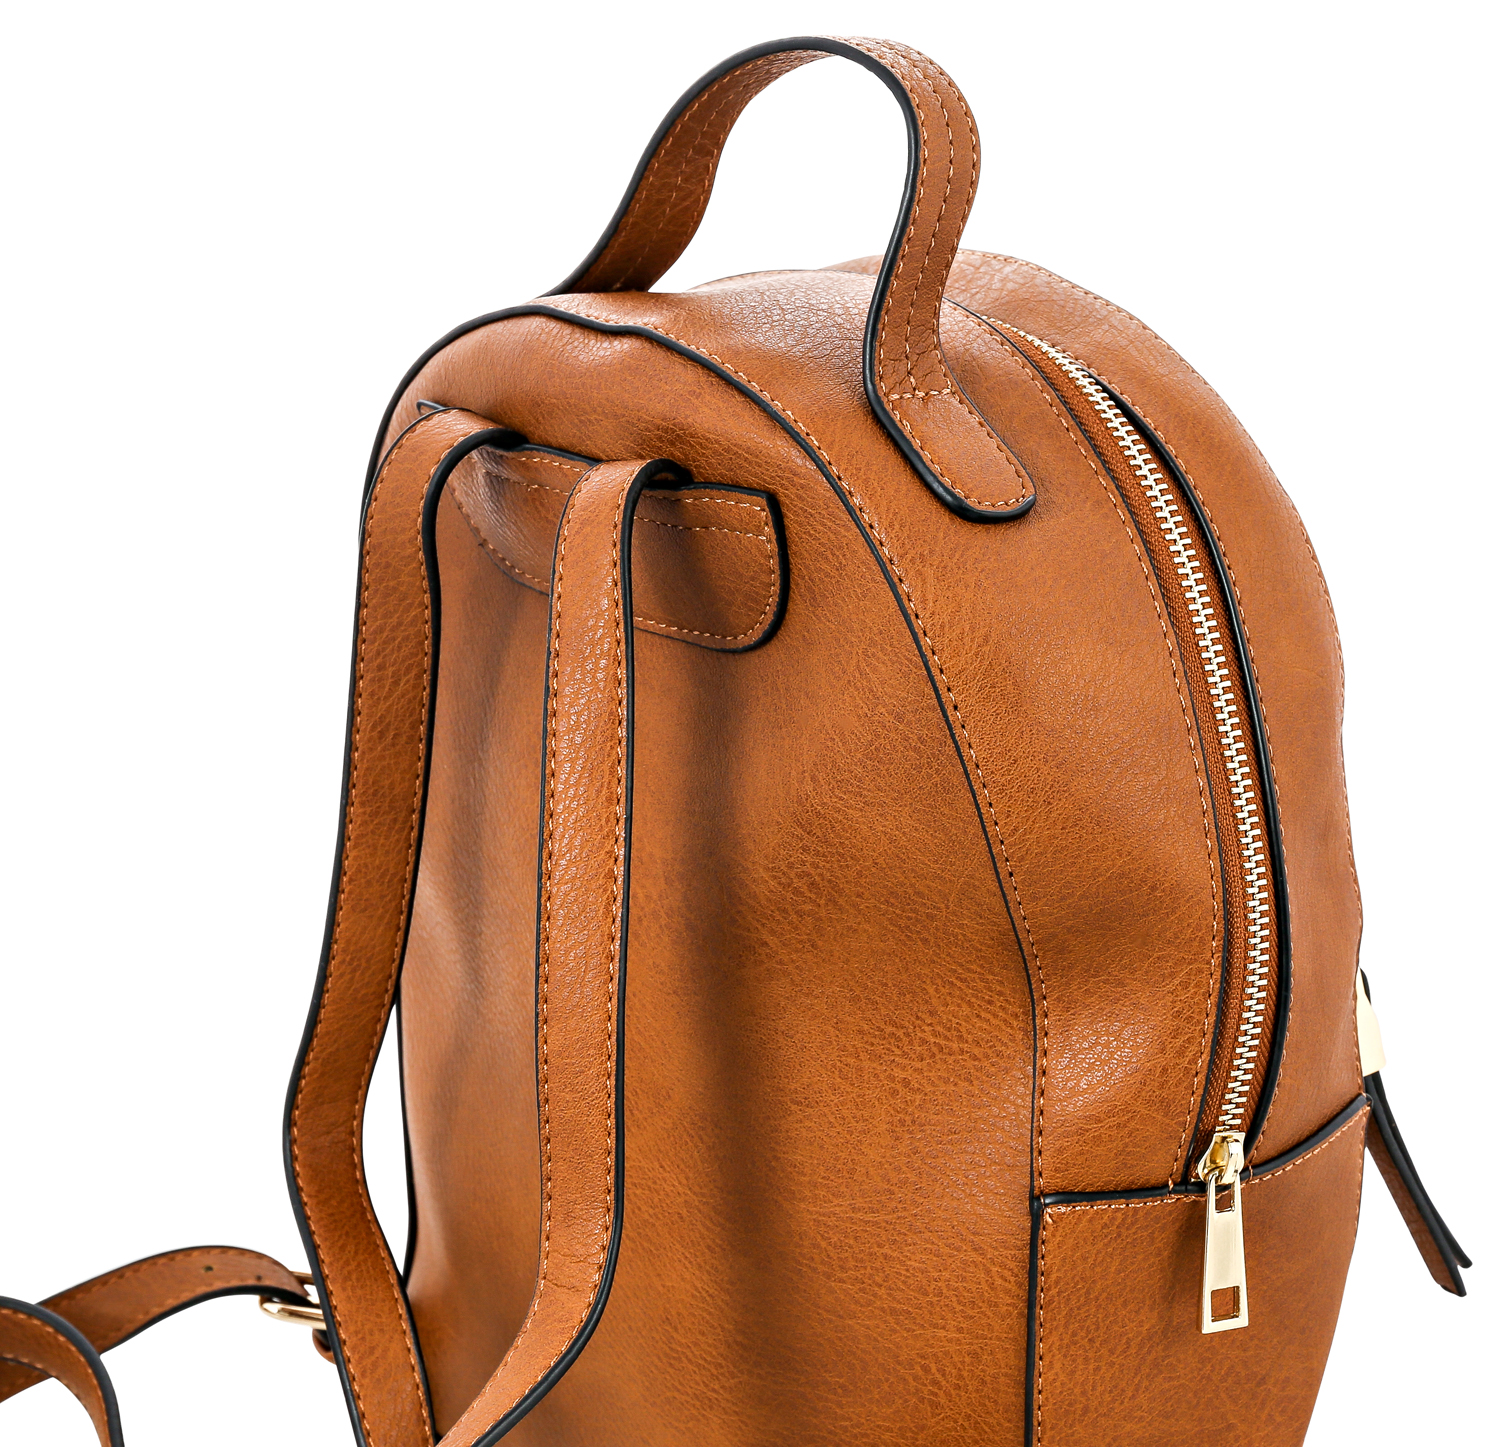 Rucksack - Elegant Bag